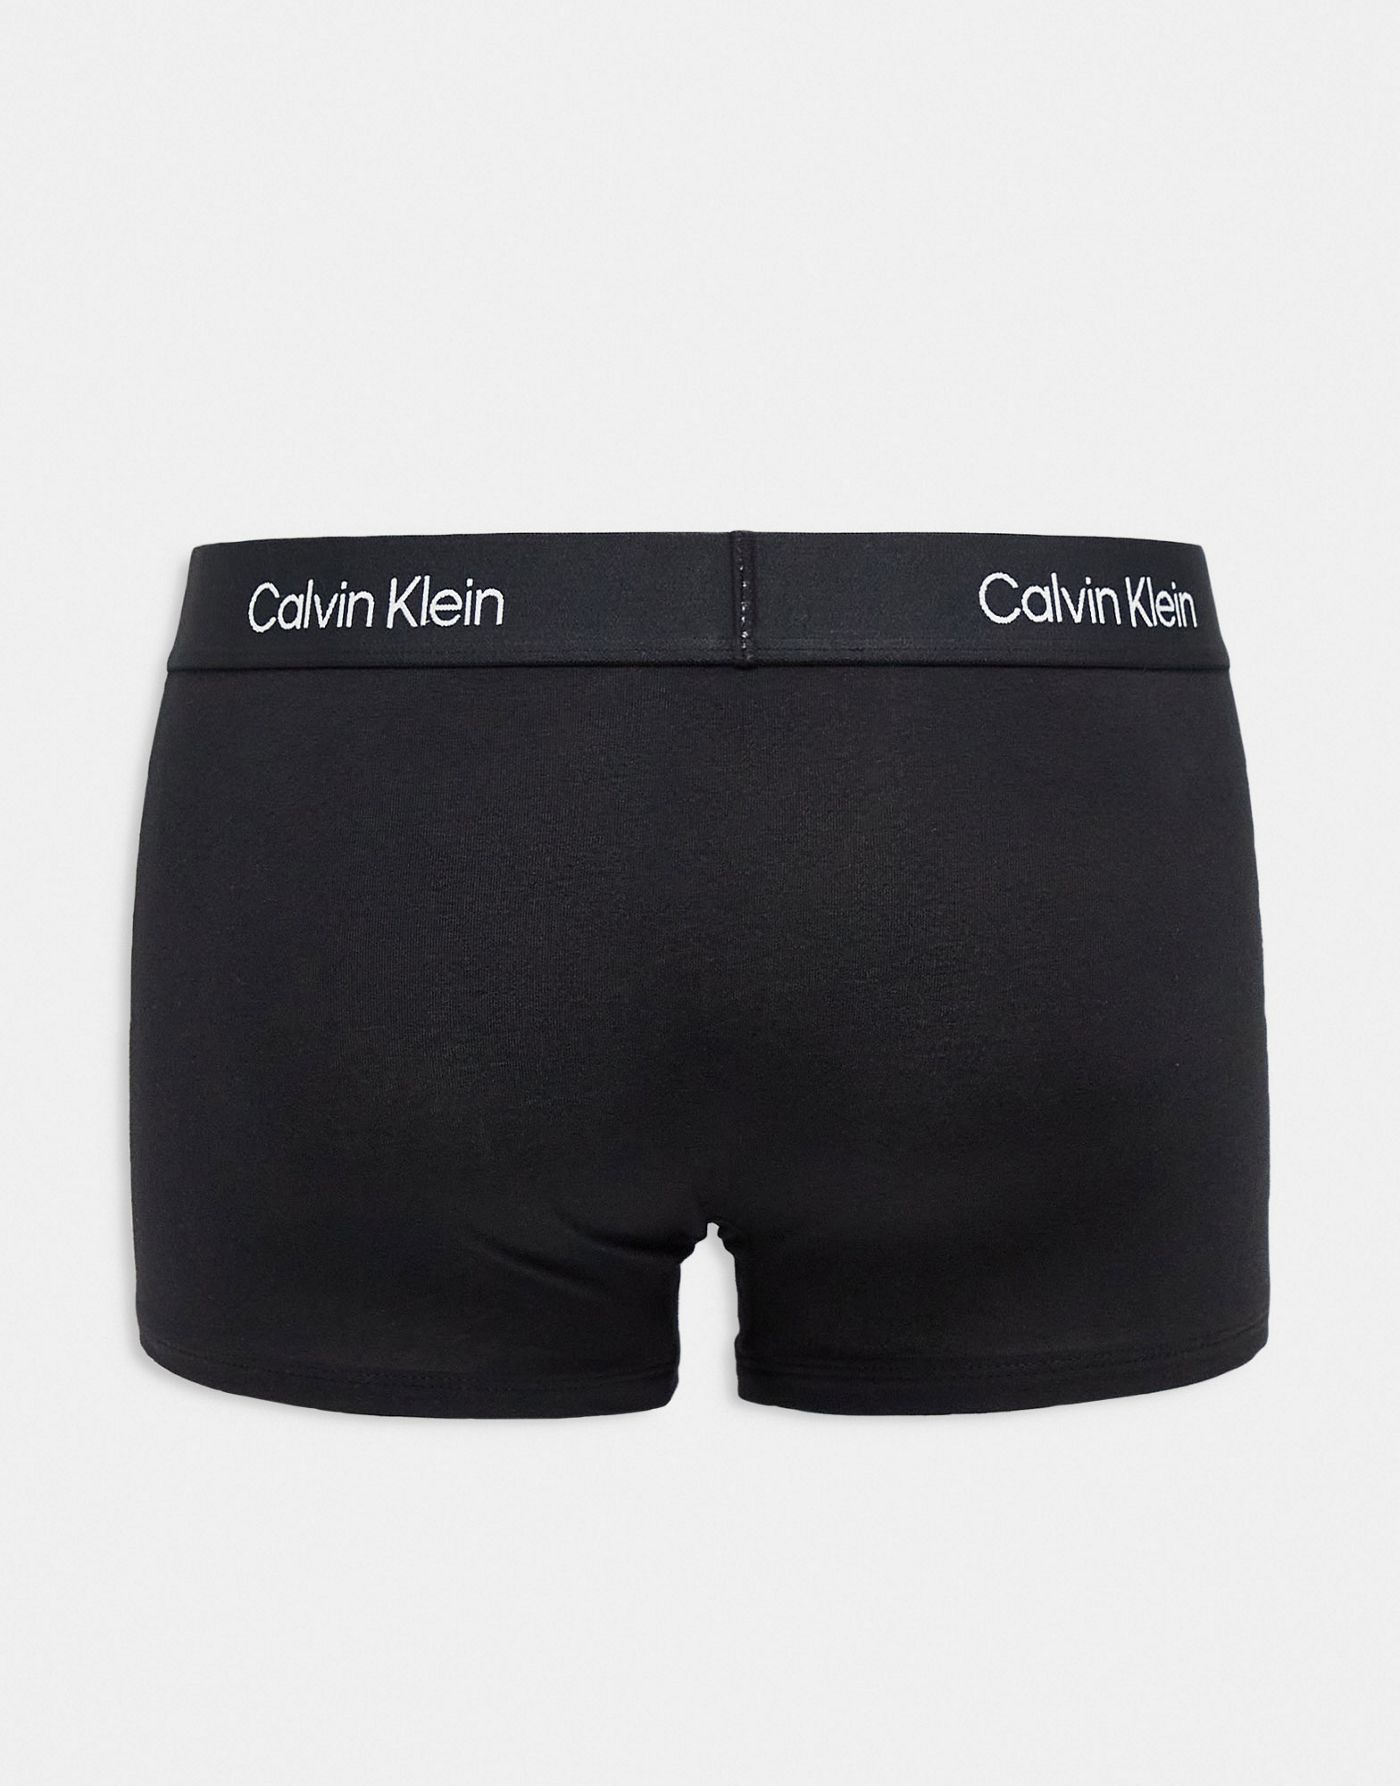 Calvin Klein CK 96 7 pack cotton trunks in black